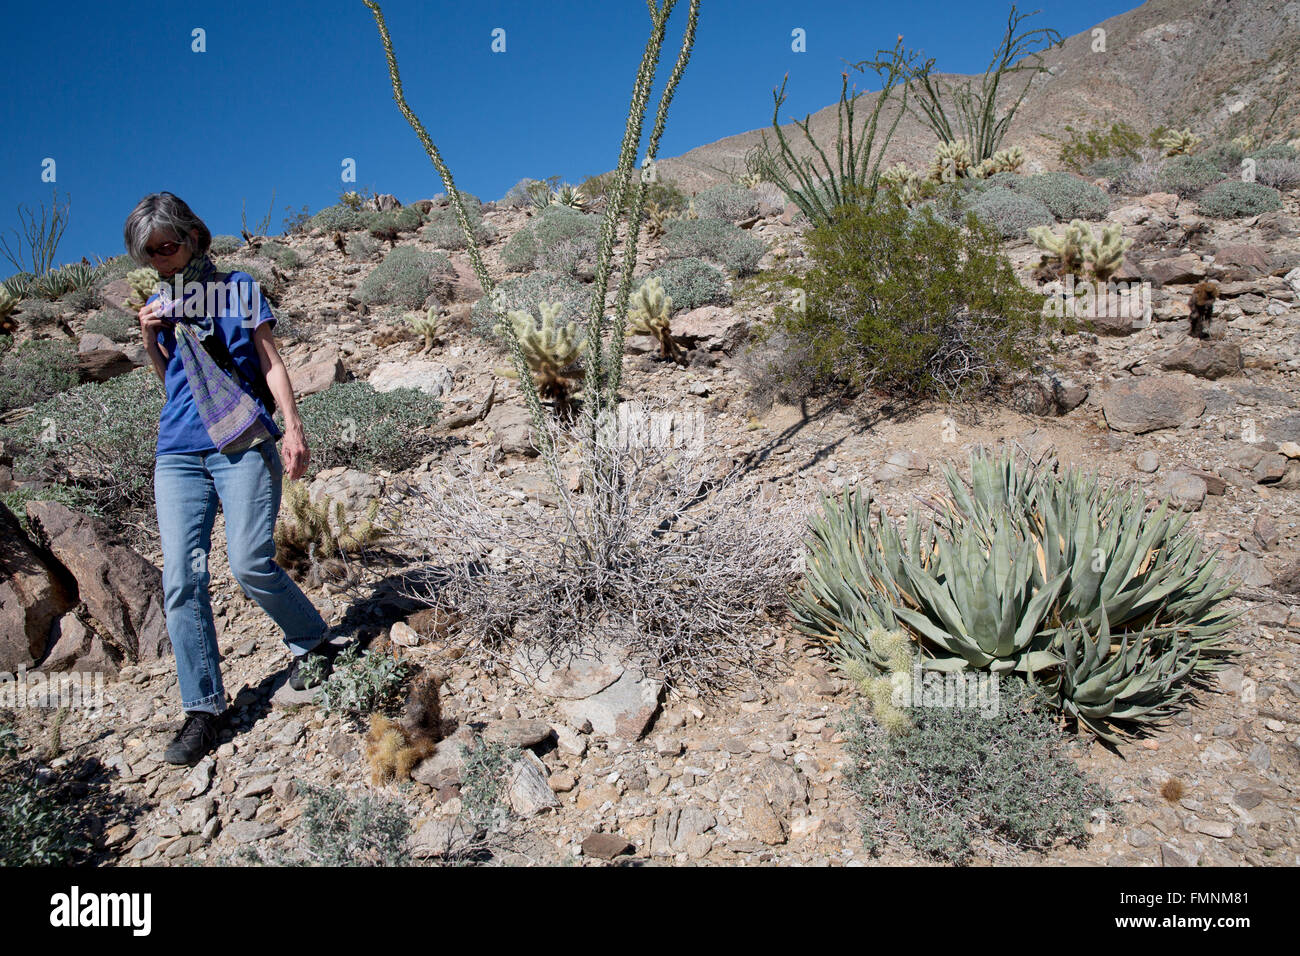 Woman walking in desert environment, Anza-Borrrego Desert State Park, California, USA Stock Photo